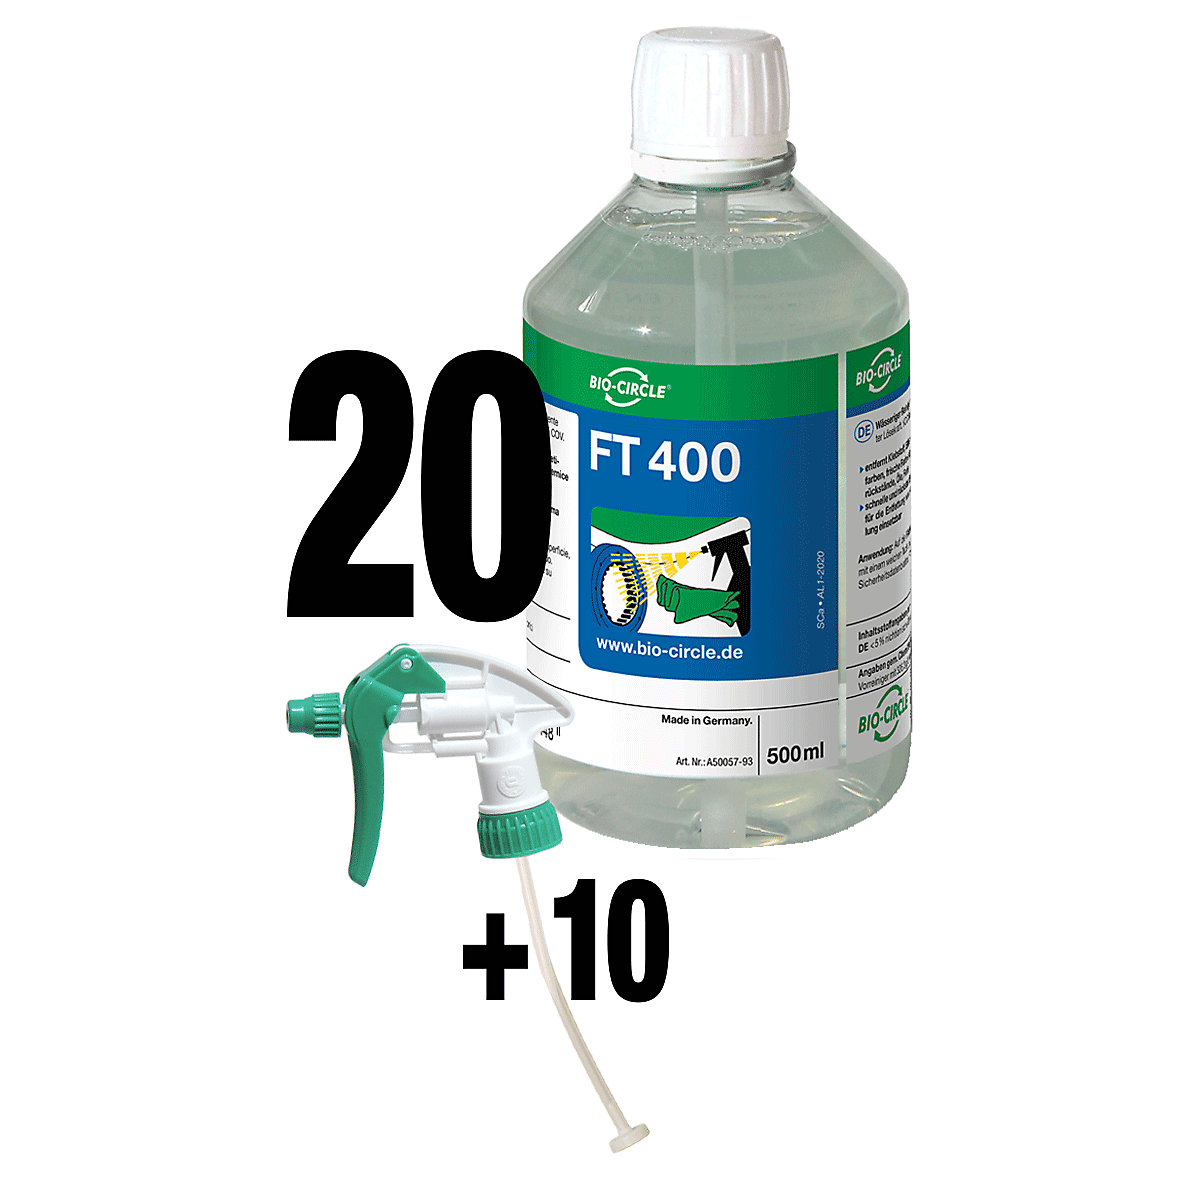 Detergente FT 400 - Bio-Circle